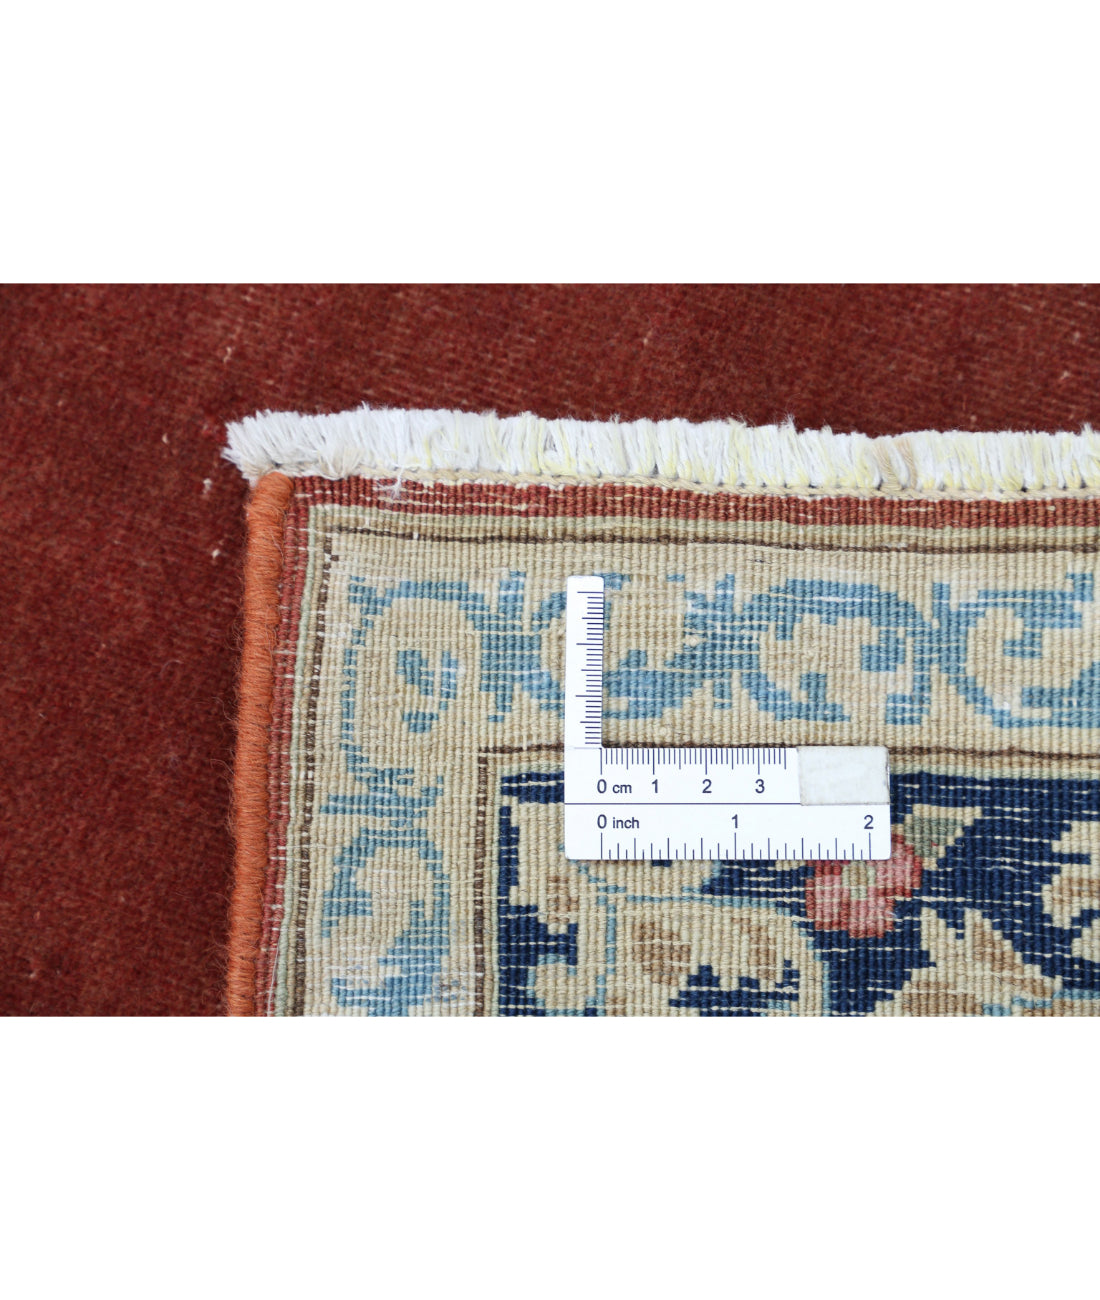 Hand Knotted Persian Kerman Wool Rug - 2'9'' x 17'4'' 2'9'' x 17'4'' (83 X 520) / Rust / Blue